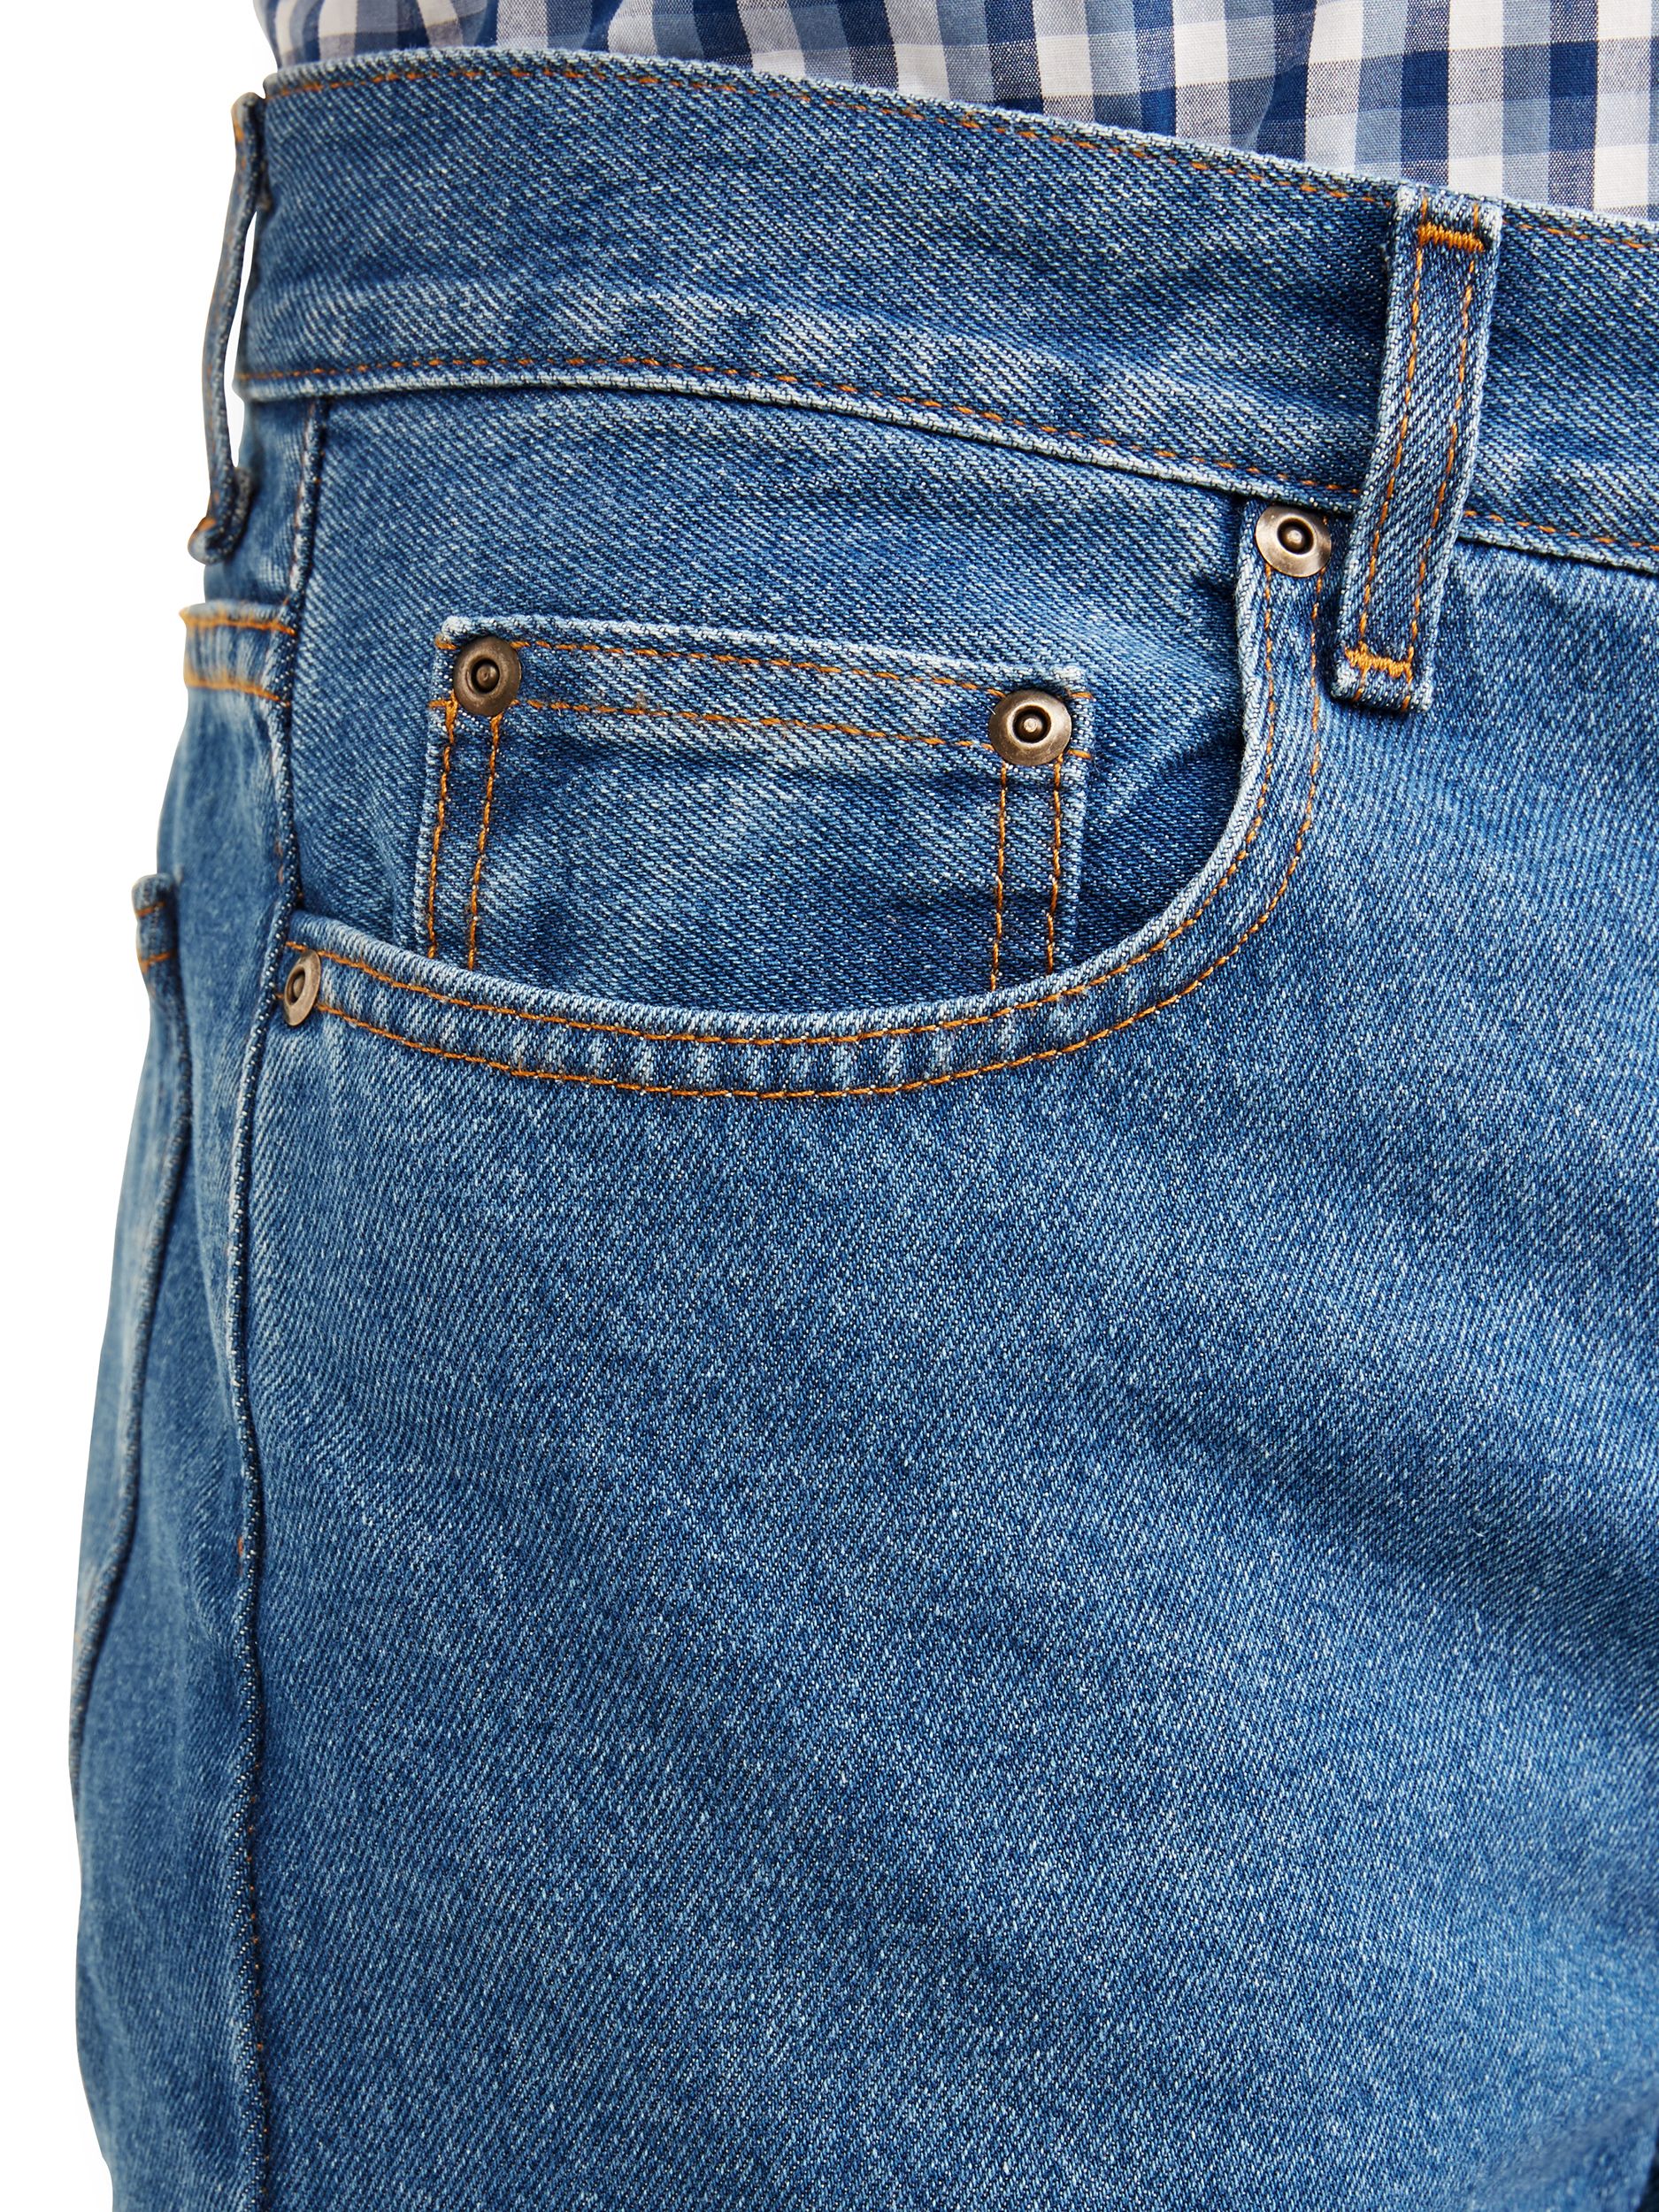 George Men's 100% Cotton Regular Fit Jeans, 2-Pack - image 5 of 7